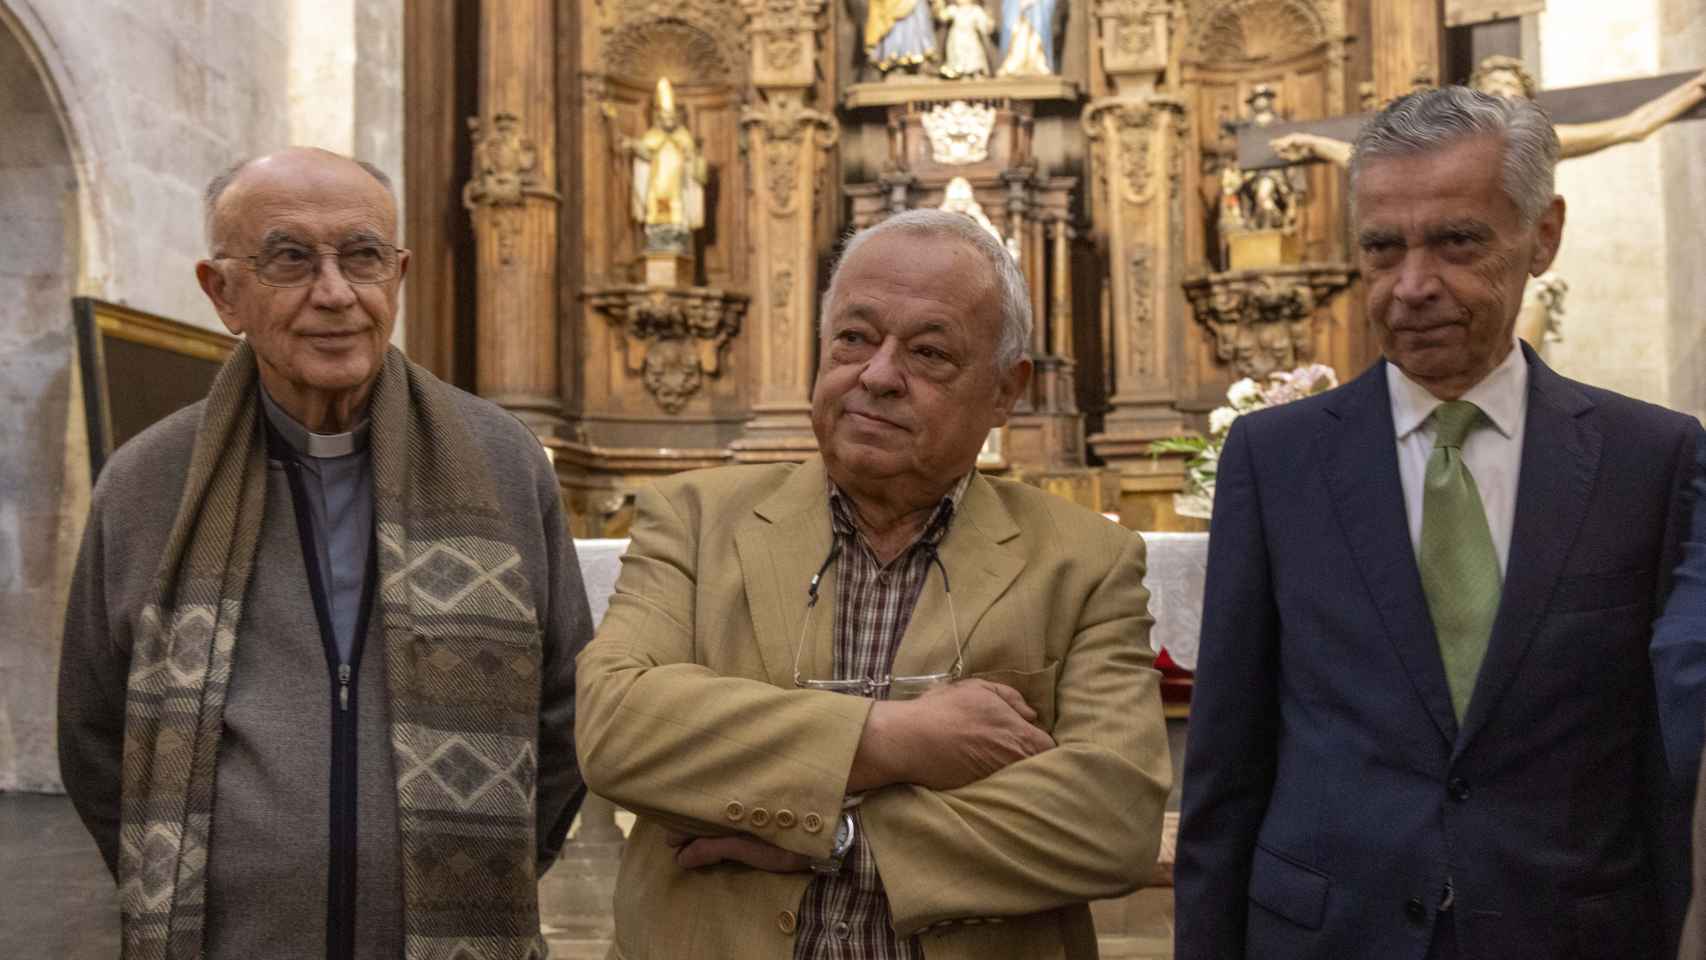 Visita institucional a la iglesia de San Martín de Tours de Salamanca